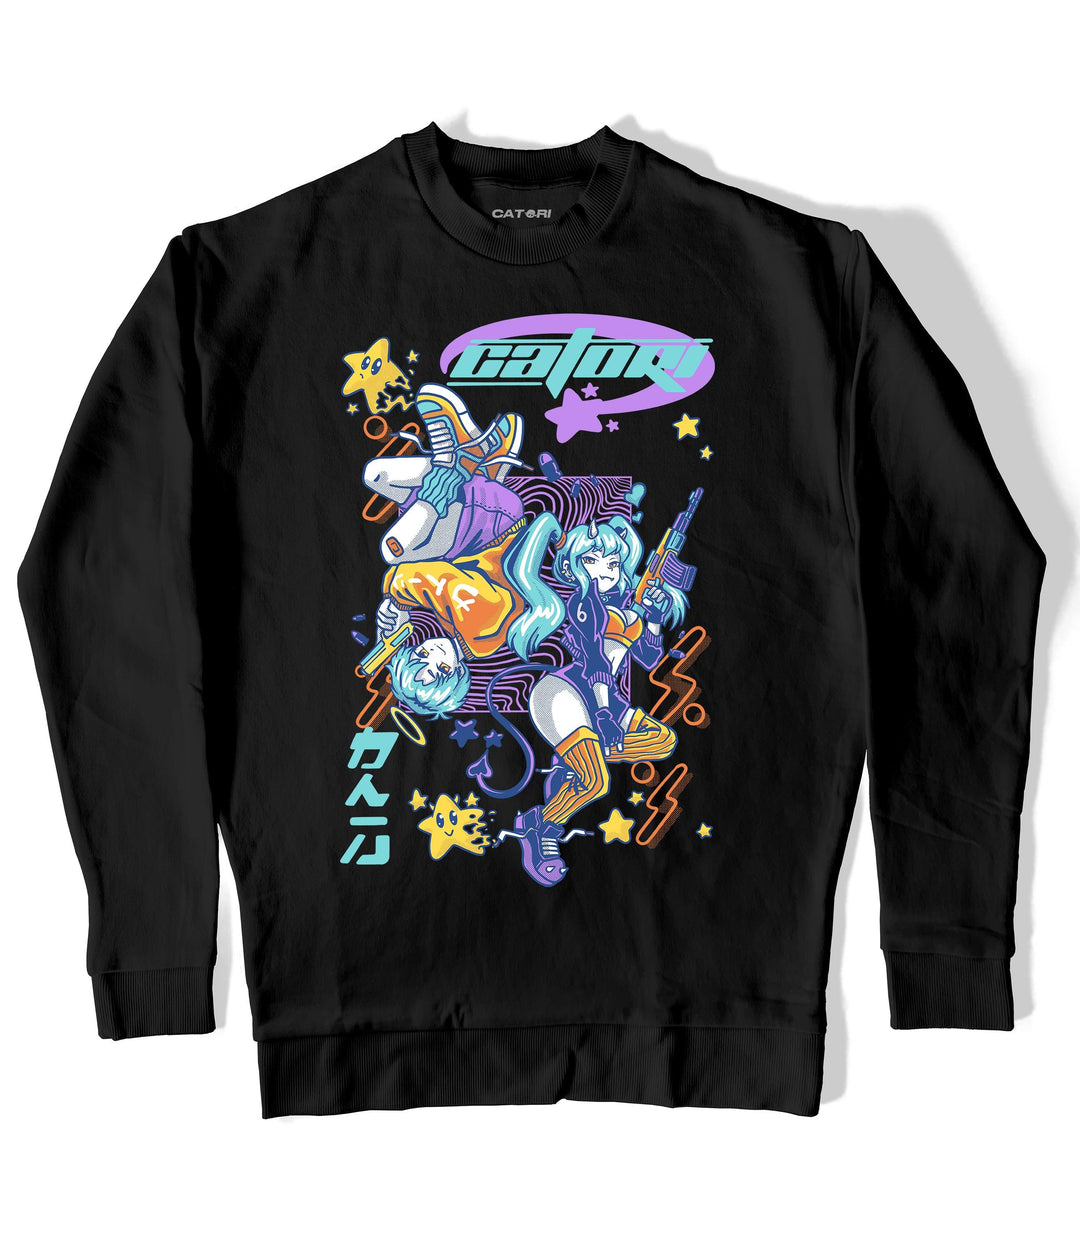 2Gunners Sweatshirt at Catori Clothing | Graphic & Anime Tees, Hoodies & Sweatshirts 